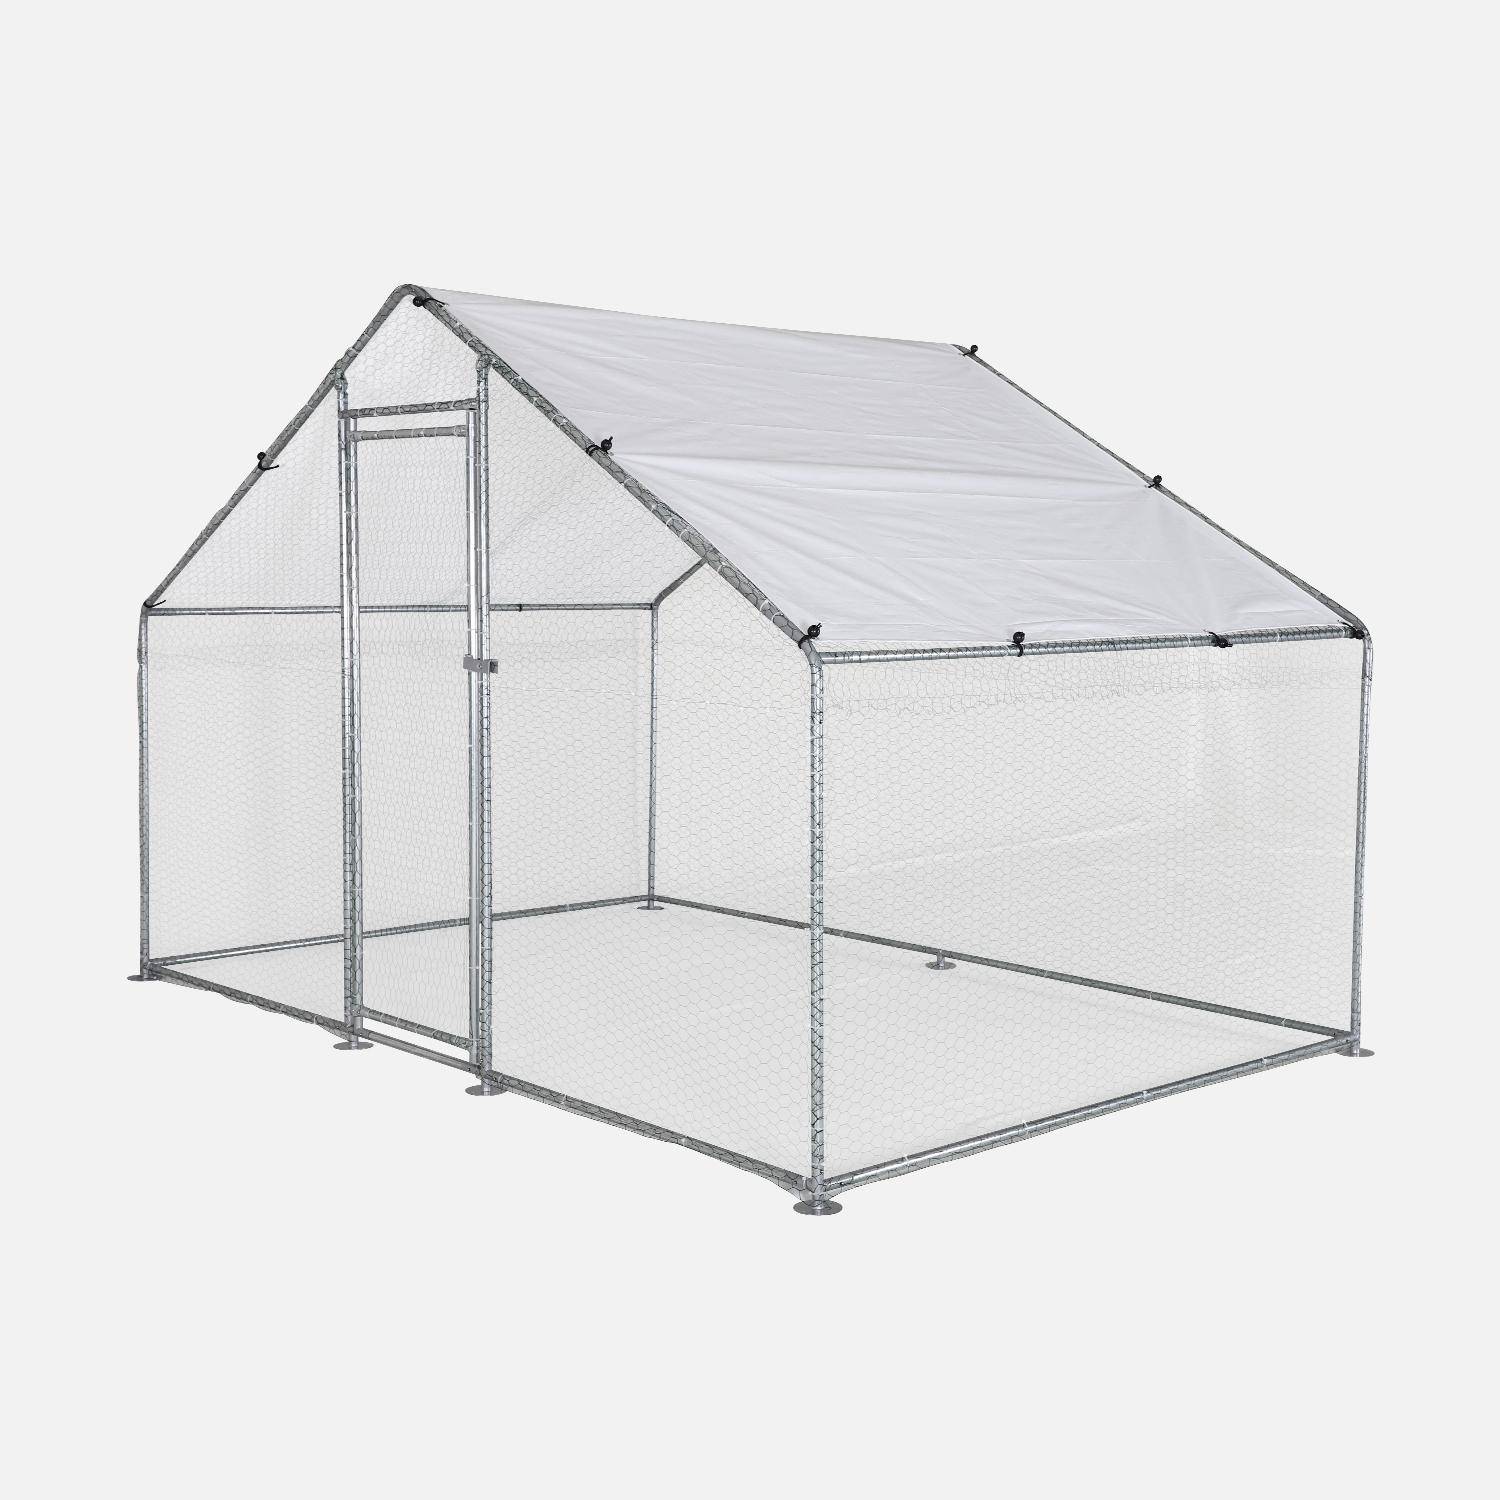 Kippenverblijf 6m² - Babette - gegalvaniseerd staal, waterdicht en UV-bestendig dak, deur met klink Photo1